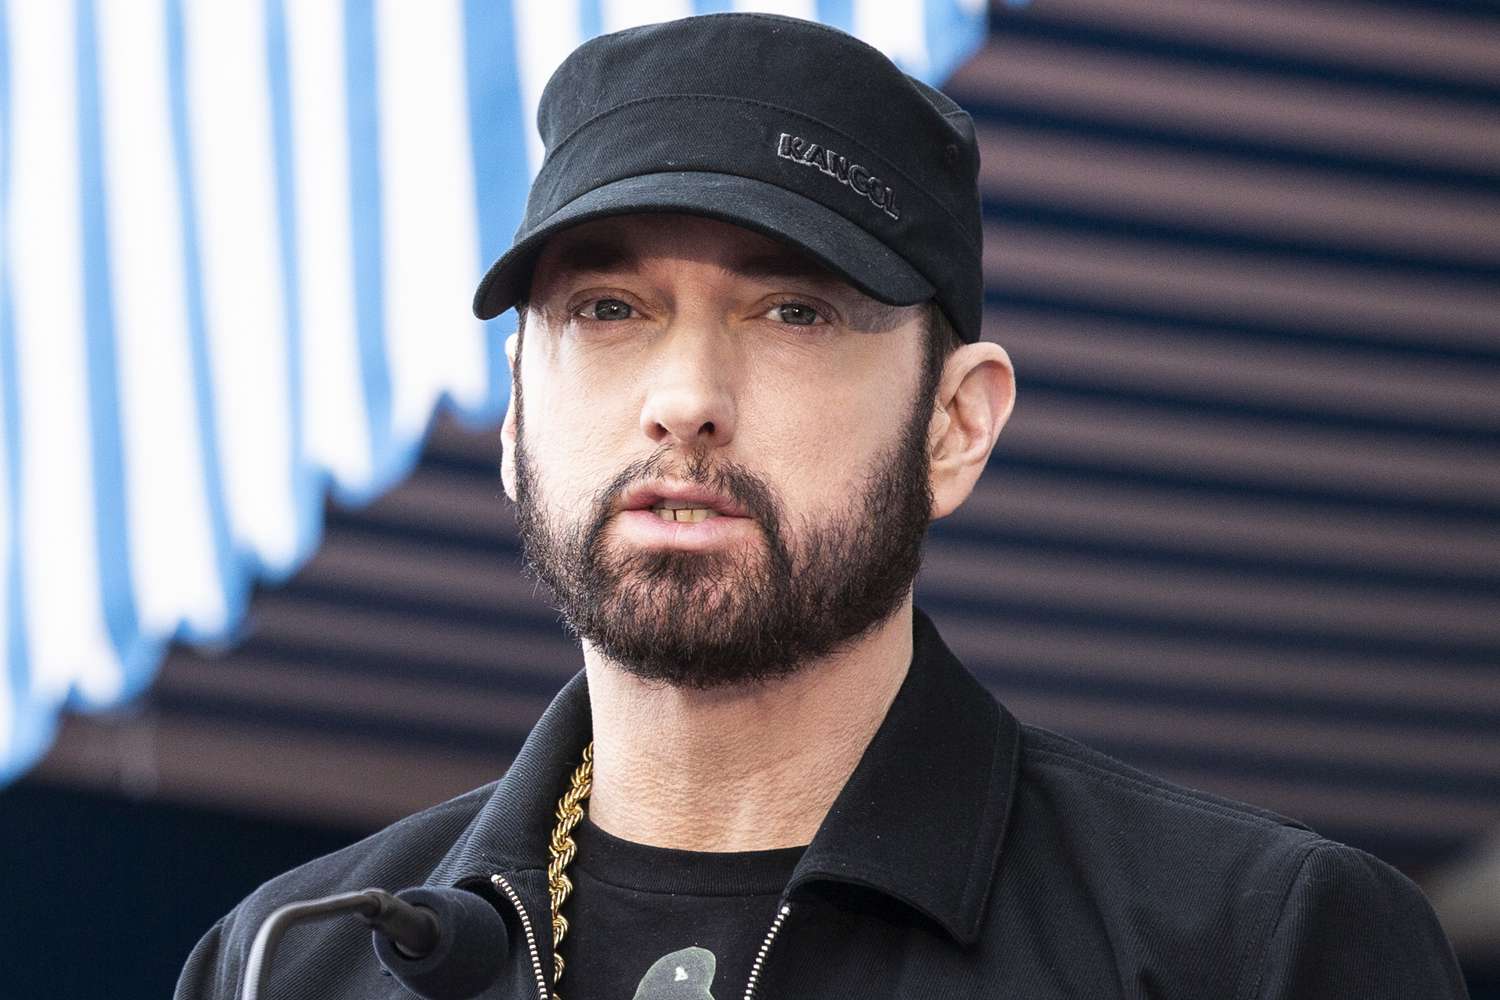 Eminem wearing a black jacket and cap